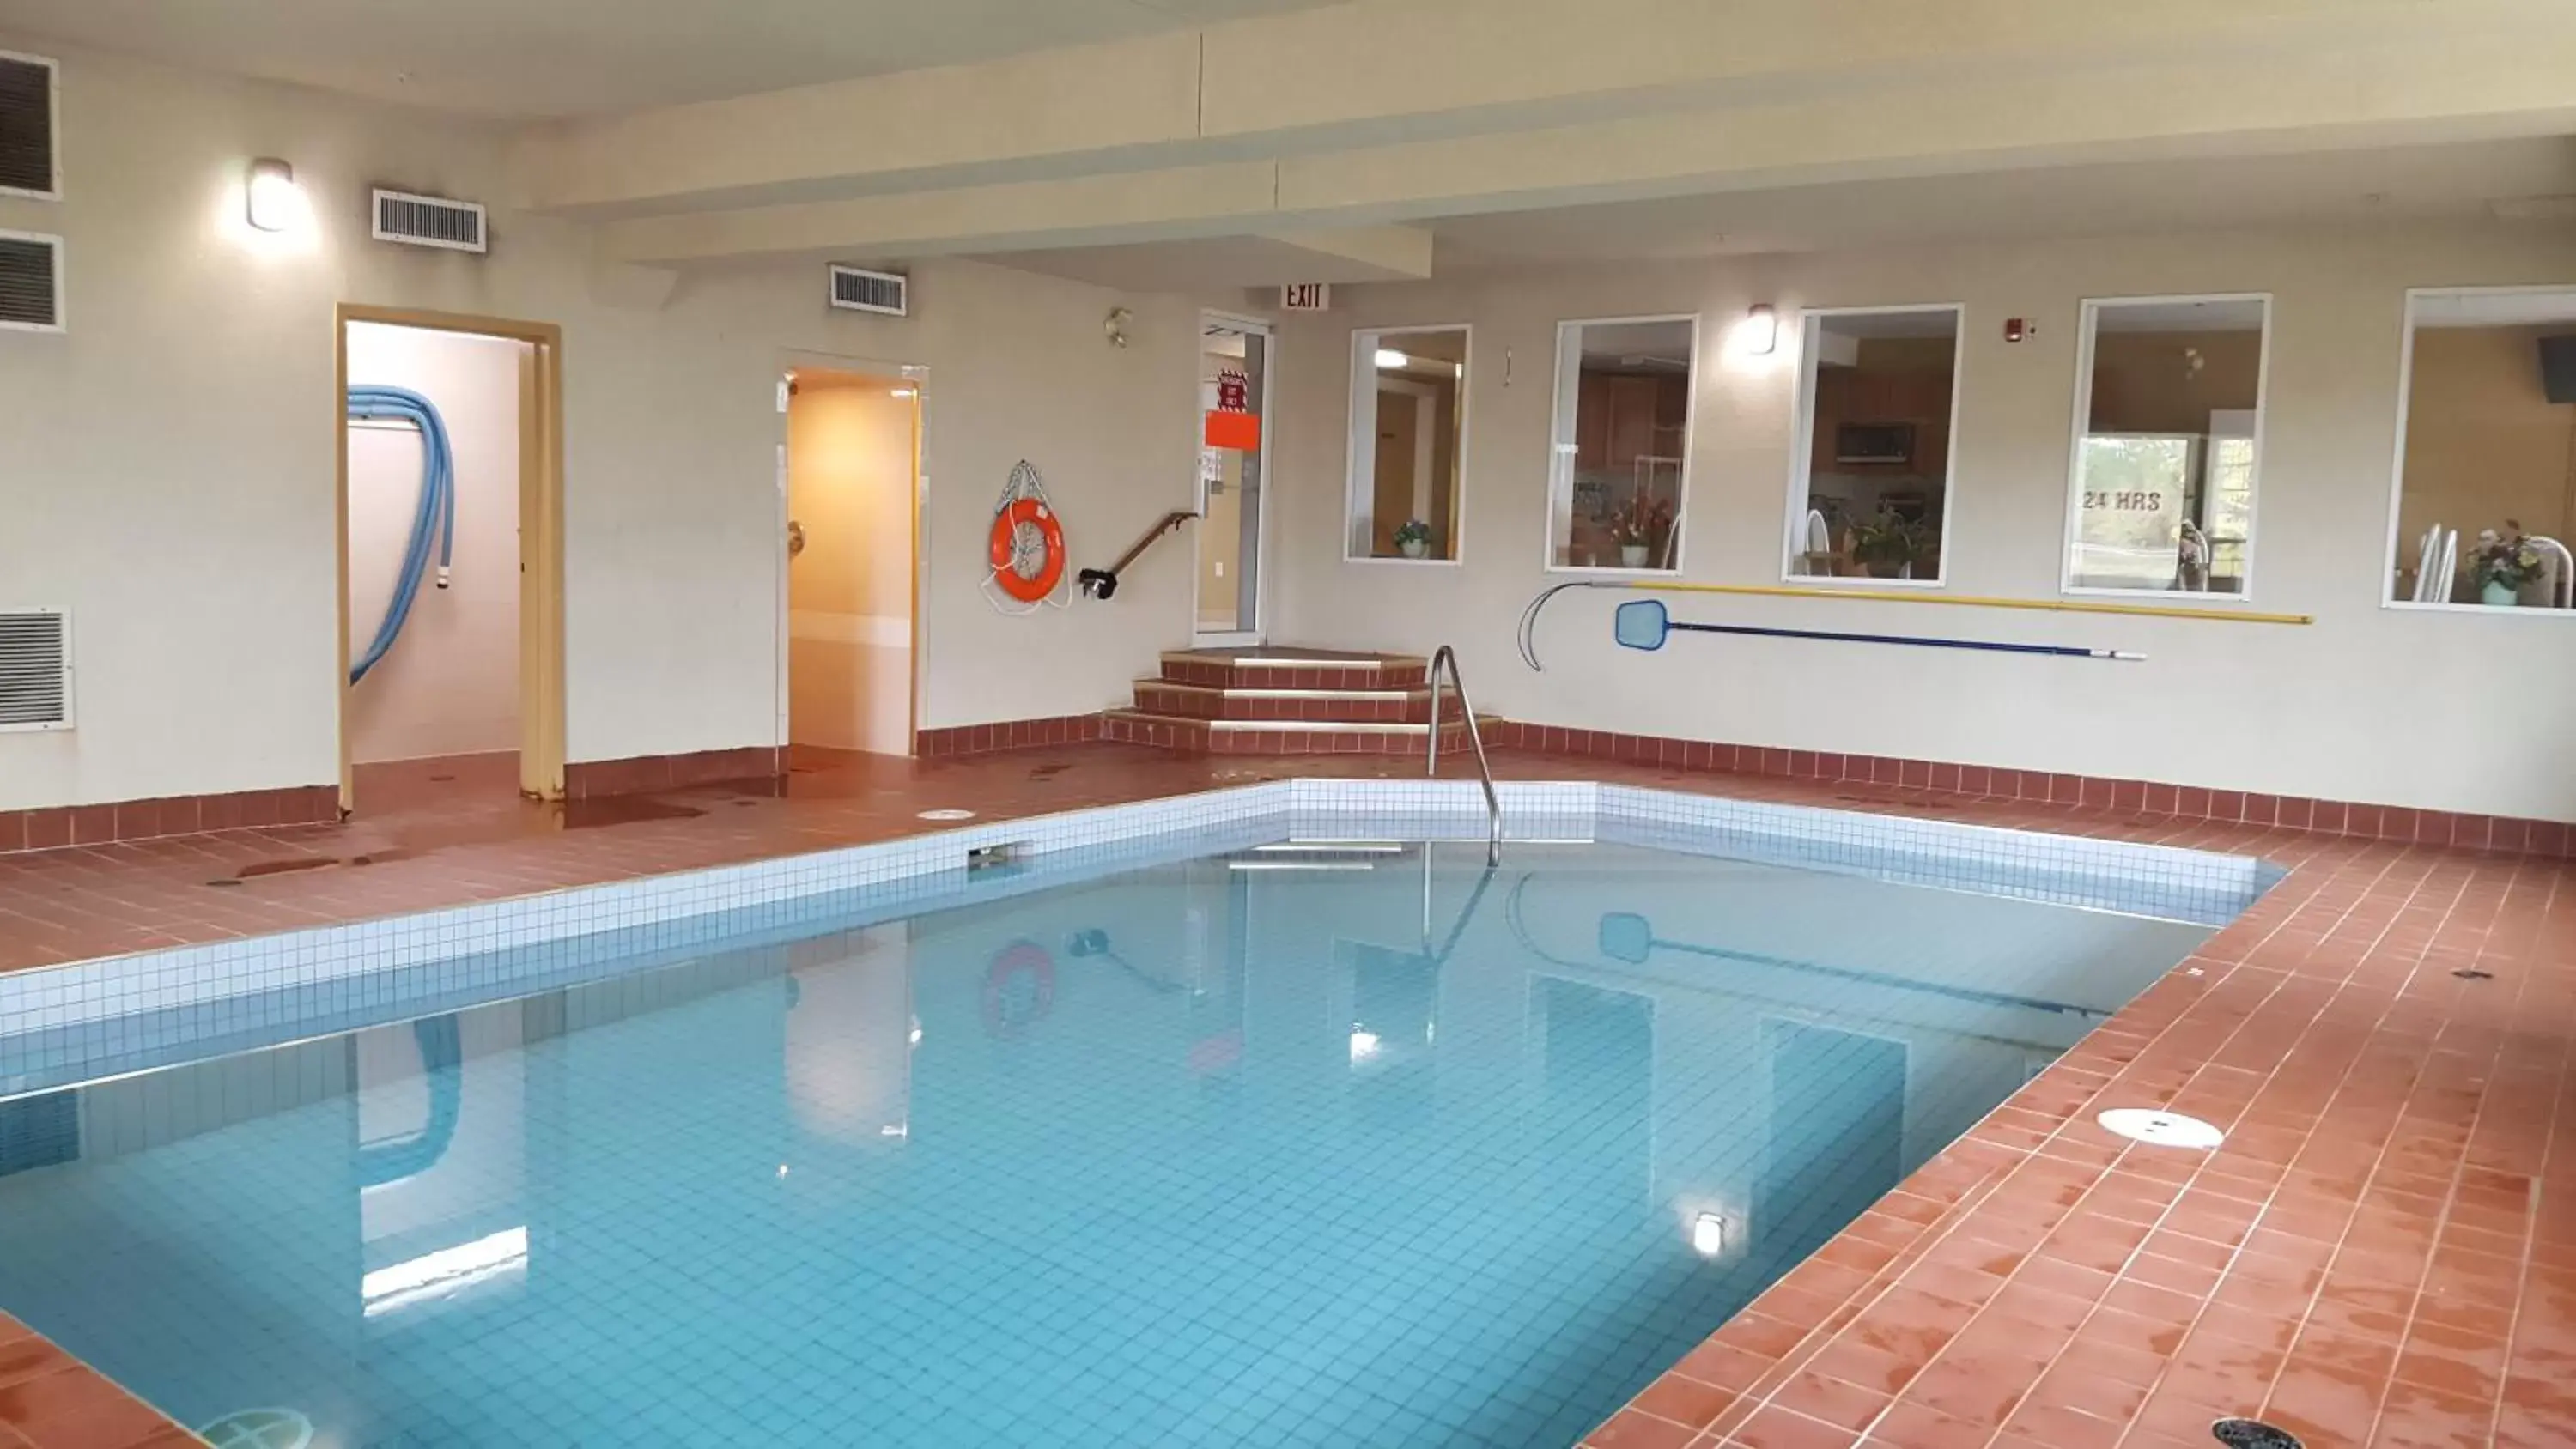 Swimming Pool in Western Budget Motel #1 & 2 Whitecourt